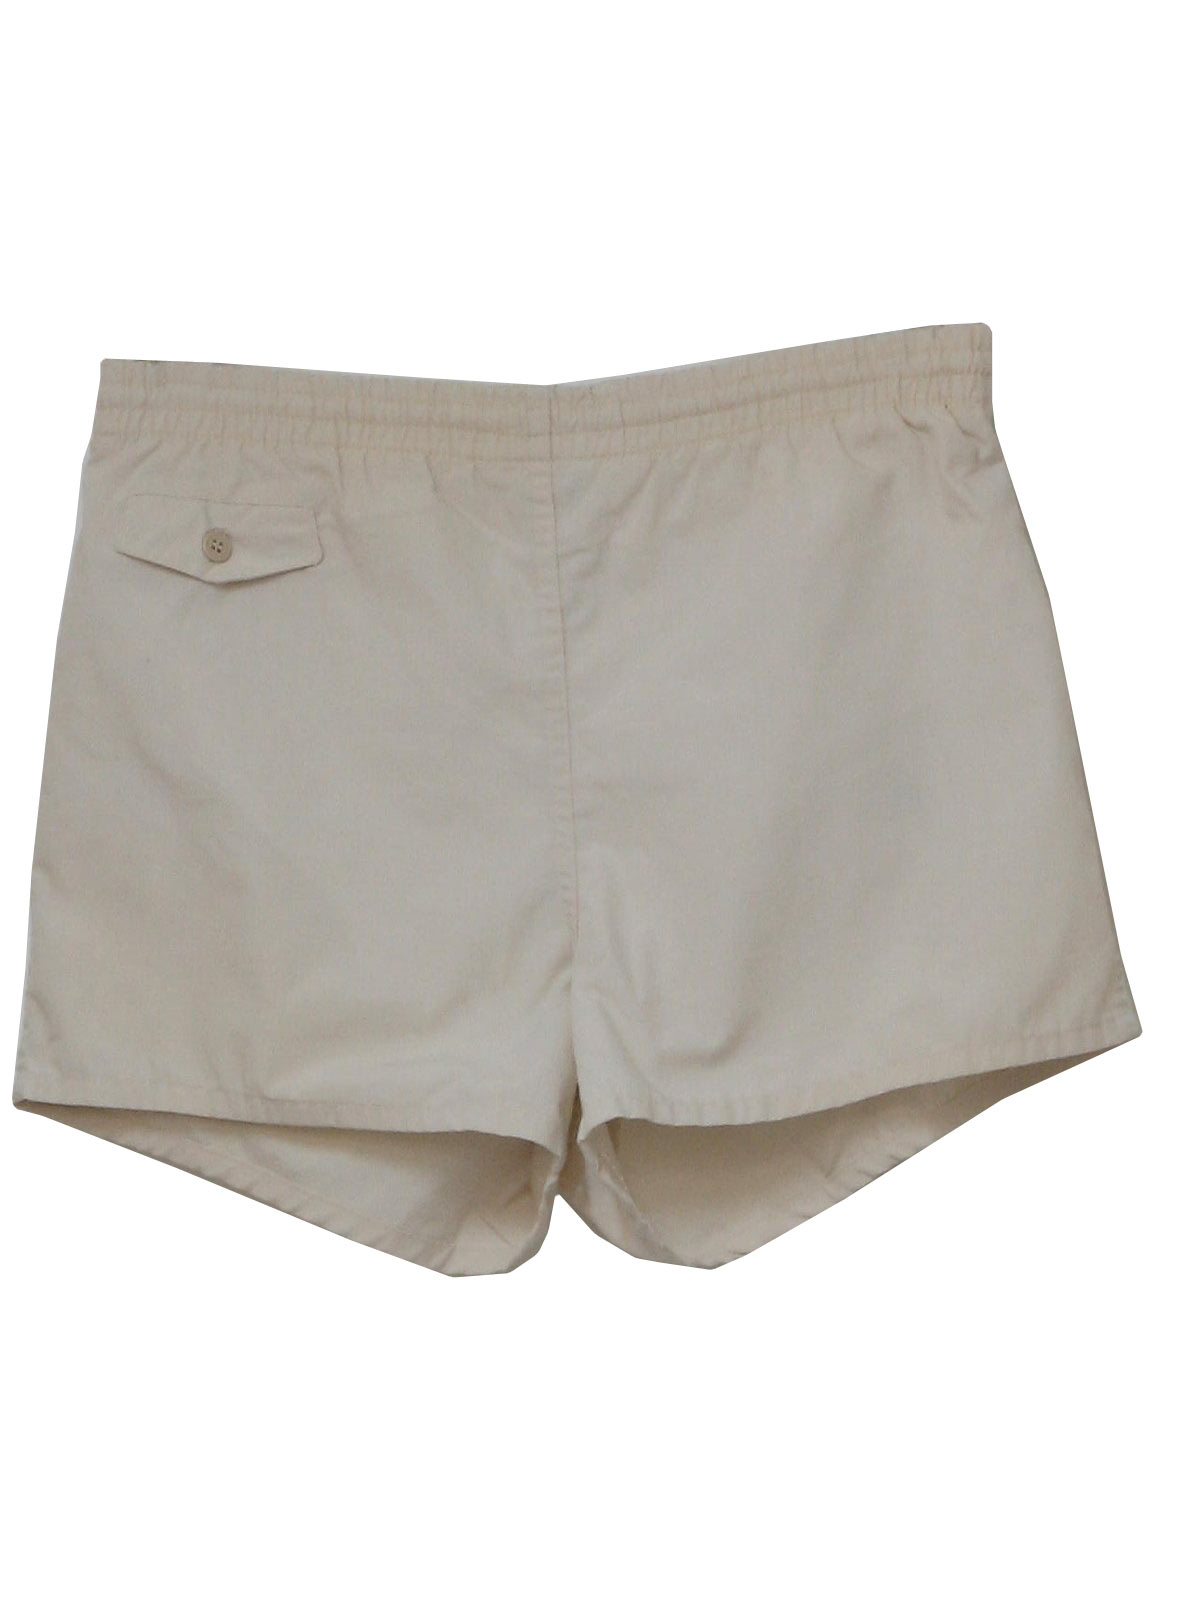 70s Swimsuit/Swimwear (Trunks): 70s -Trunks- Mens tan polyester and ...